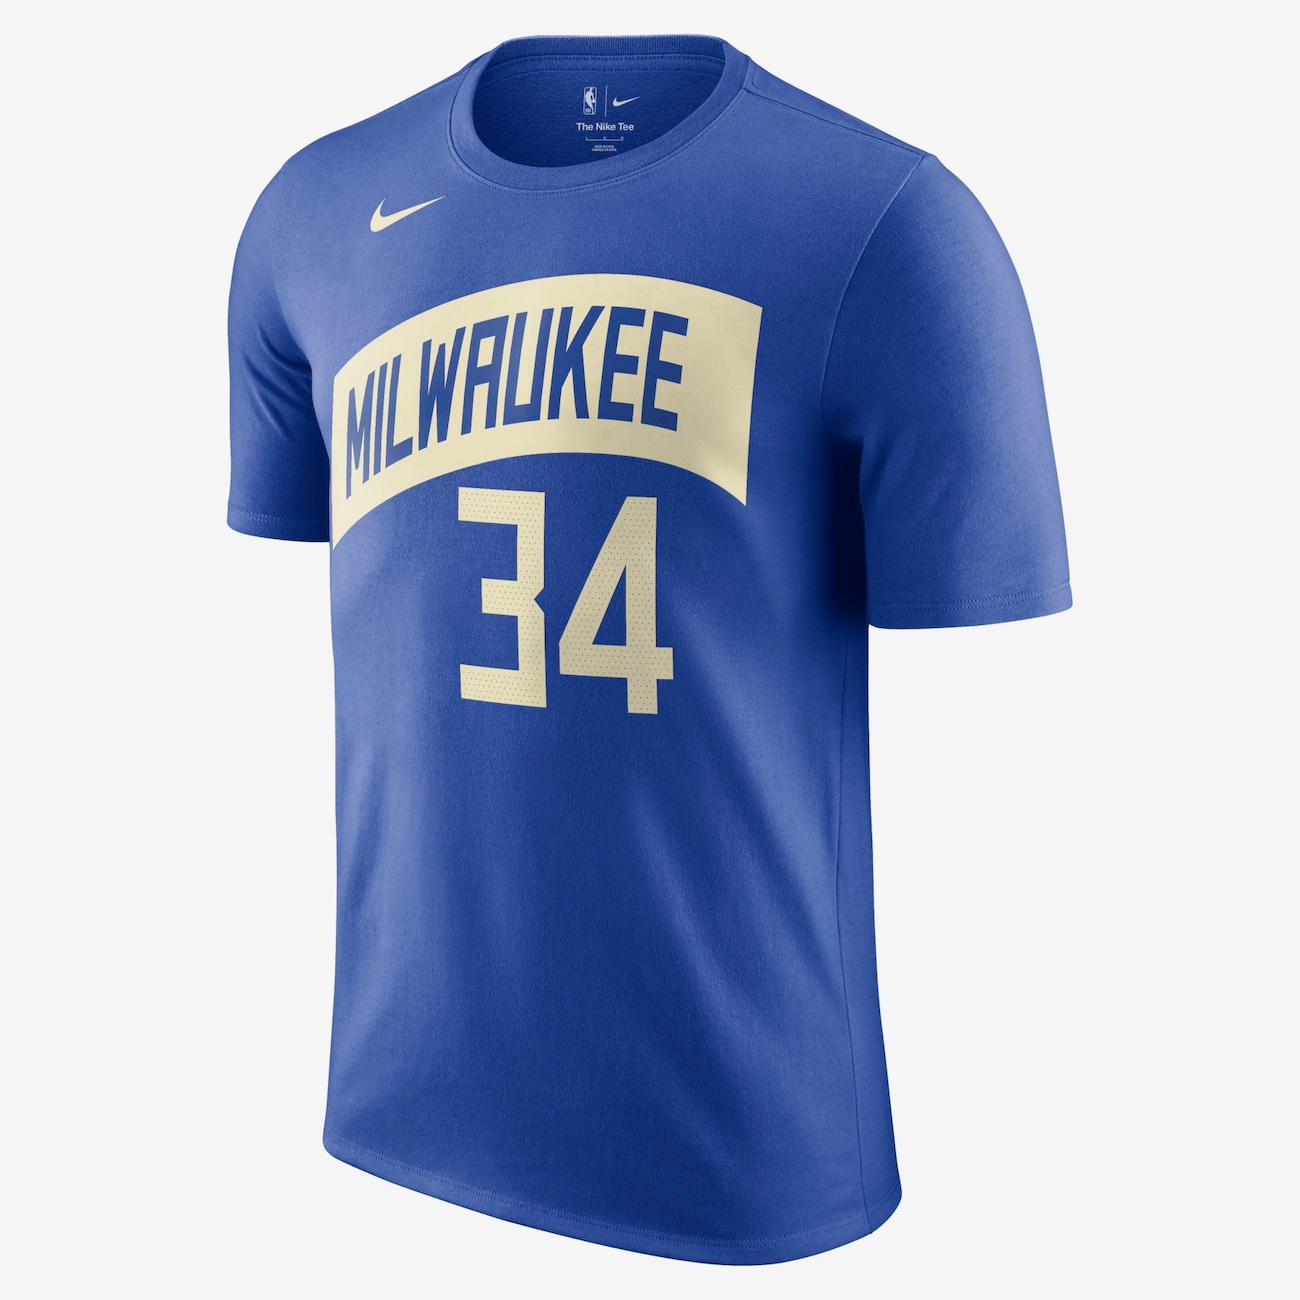 Camiseta Nike Milwaukee Bucks City Edition Masculina